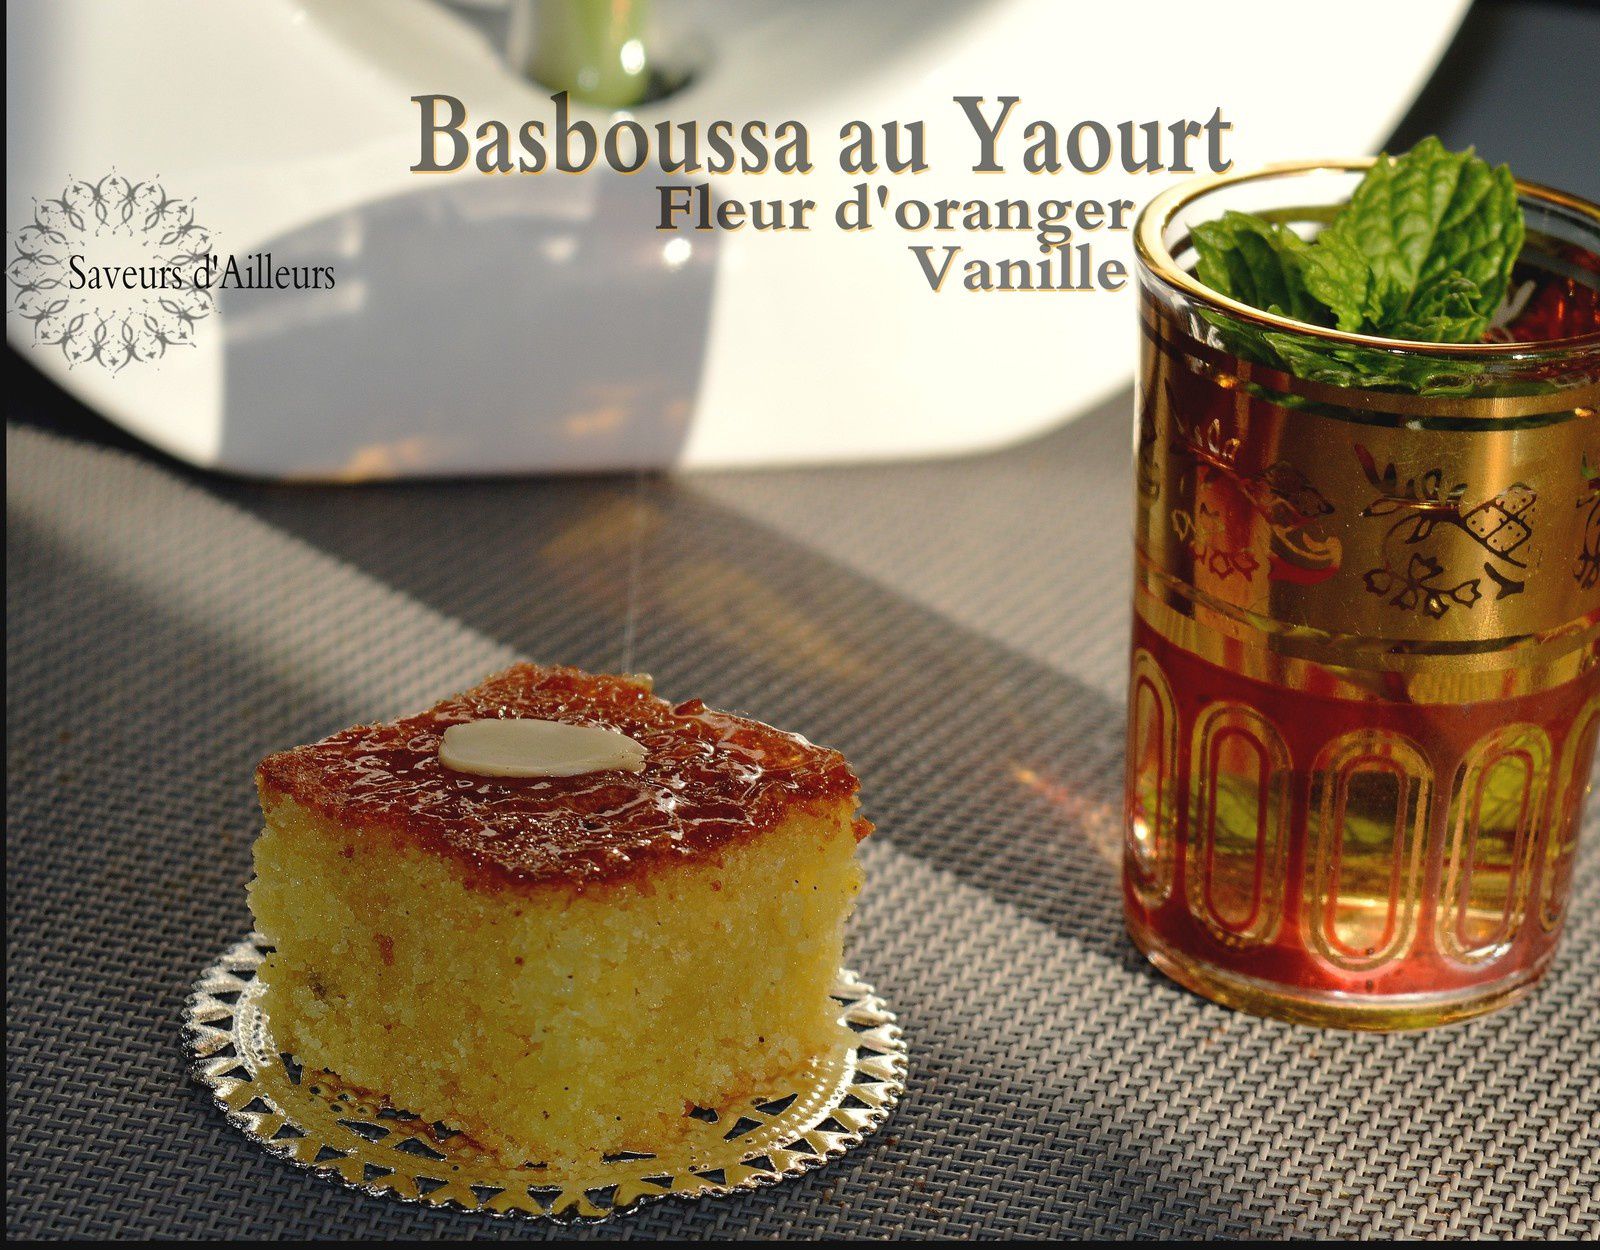 Basboussa Vanille Fleur d'oranger (inratable)